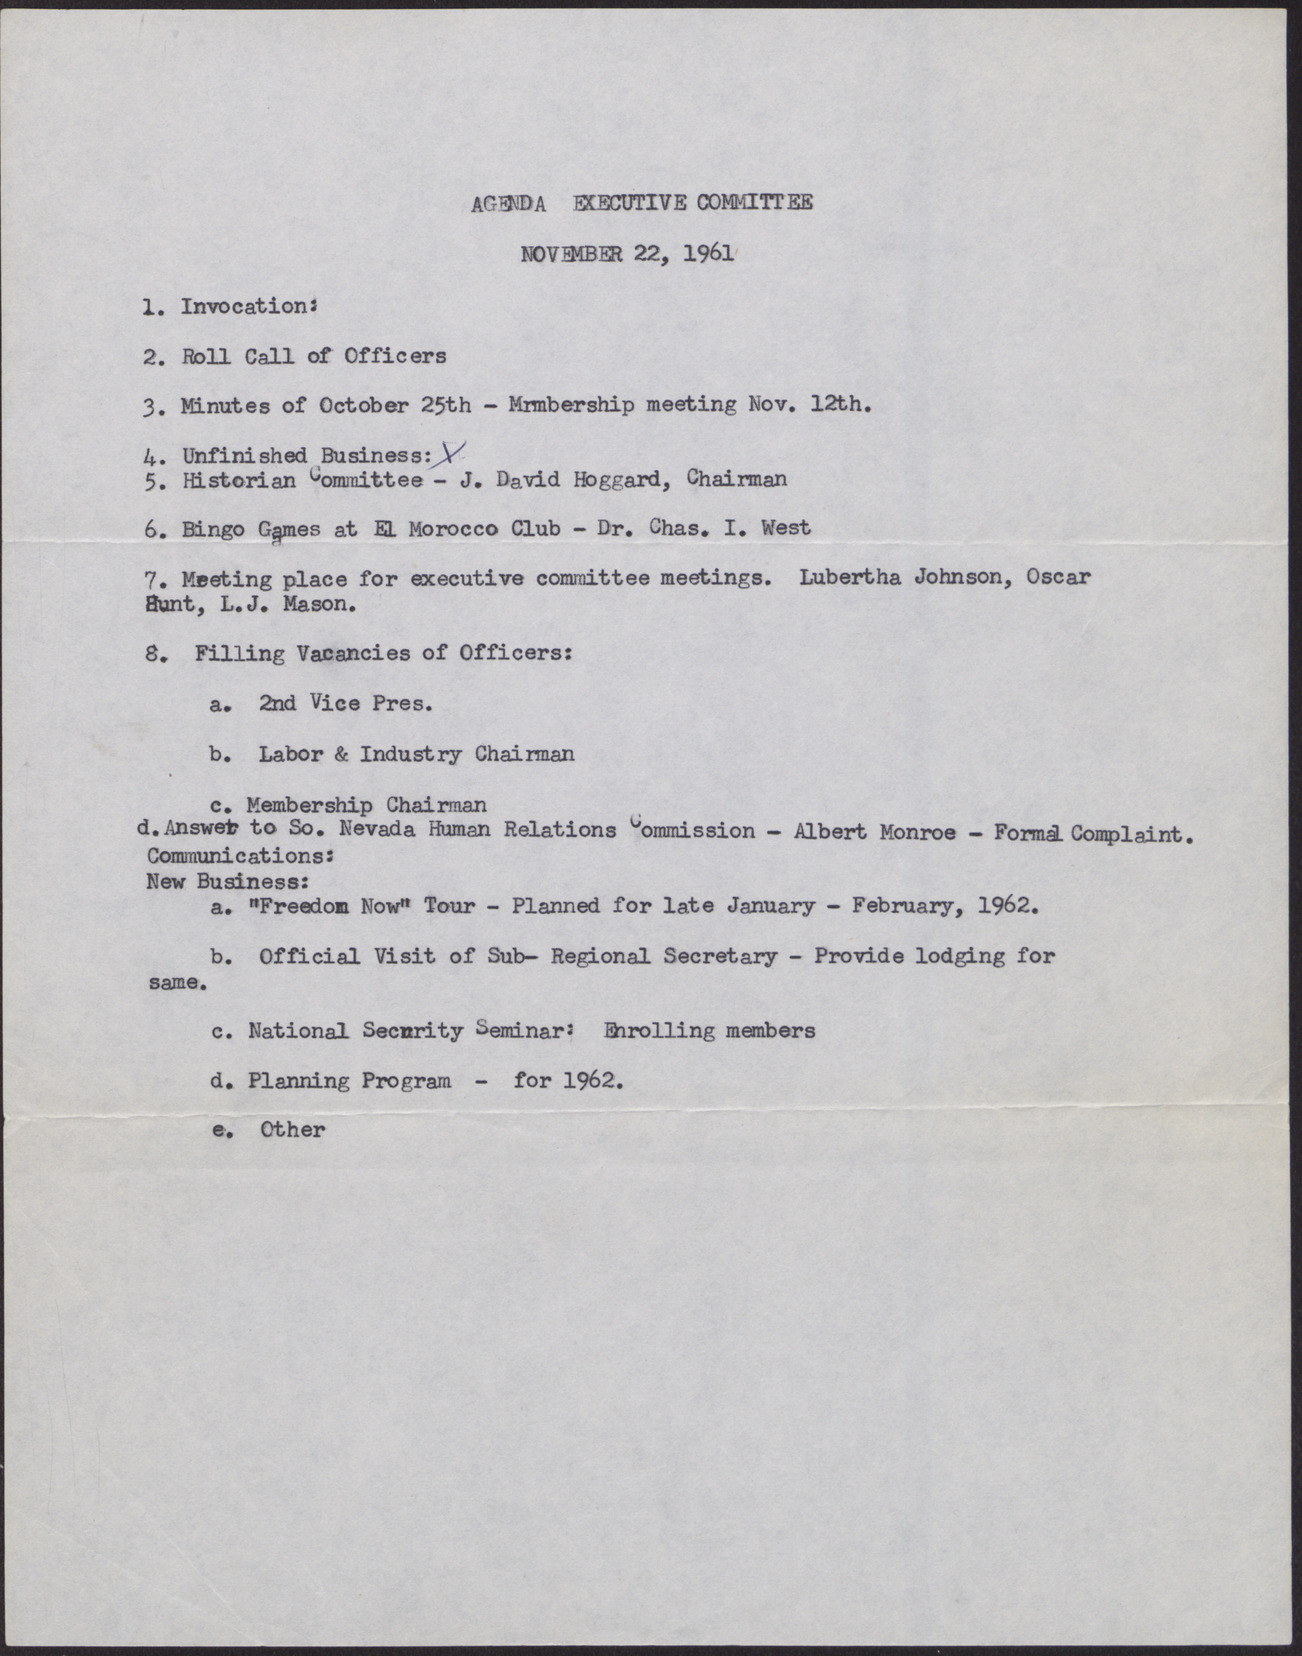 Agenda - Executive Committee Meeting, November 22, 1961